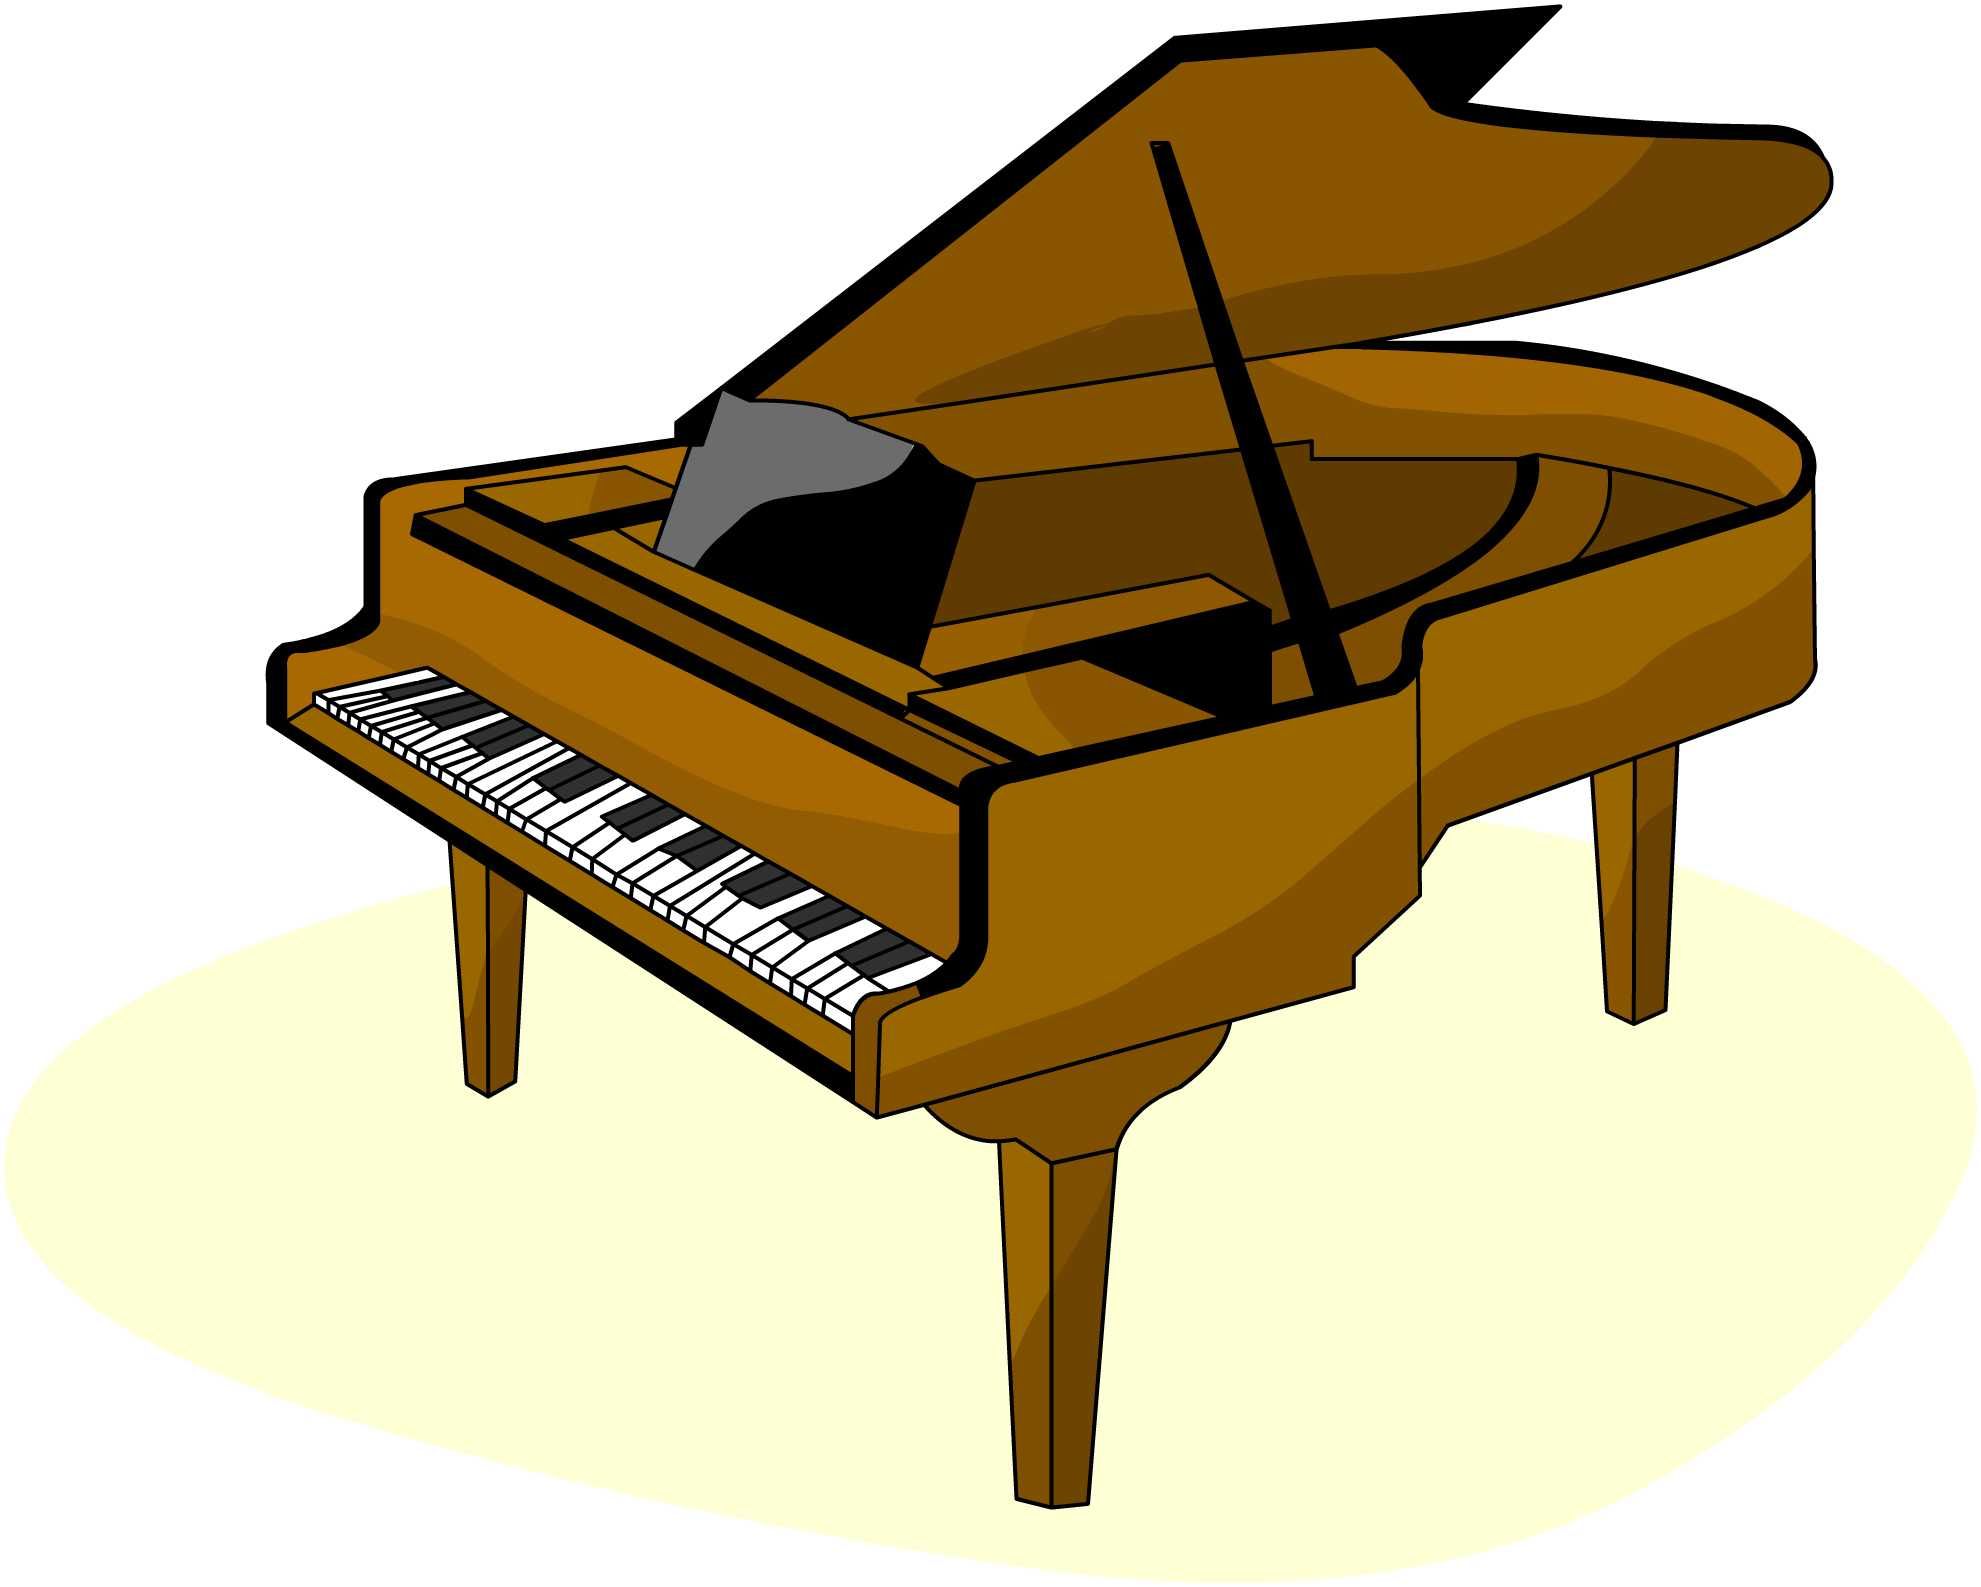 Upright piano clipart free cl - Piano Clipart